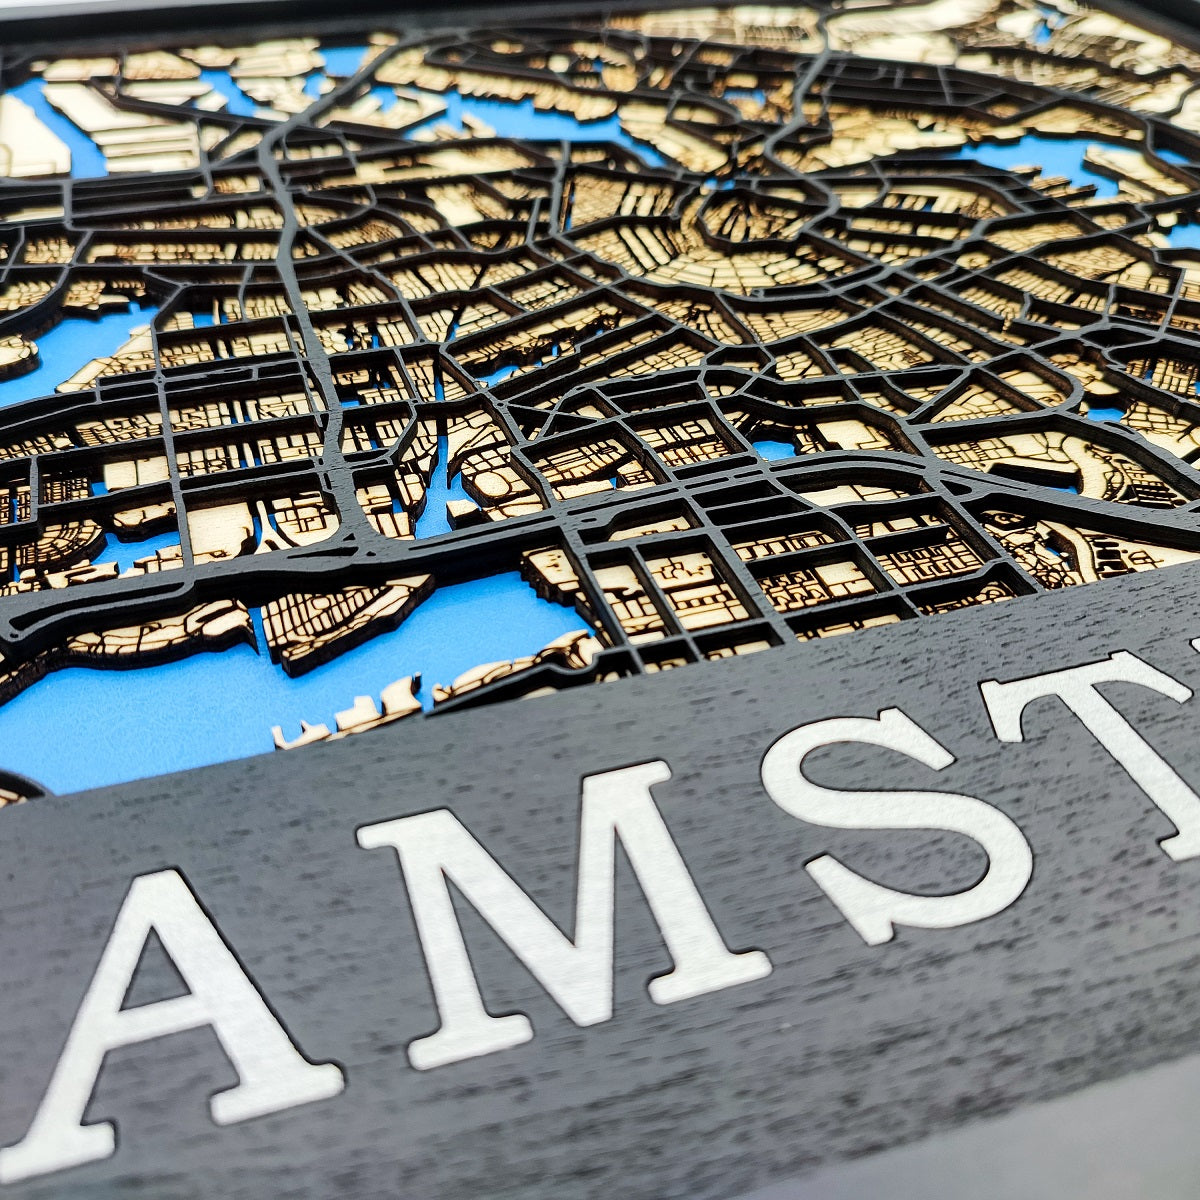 Amsterdam - Carte en bois